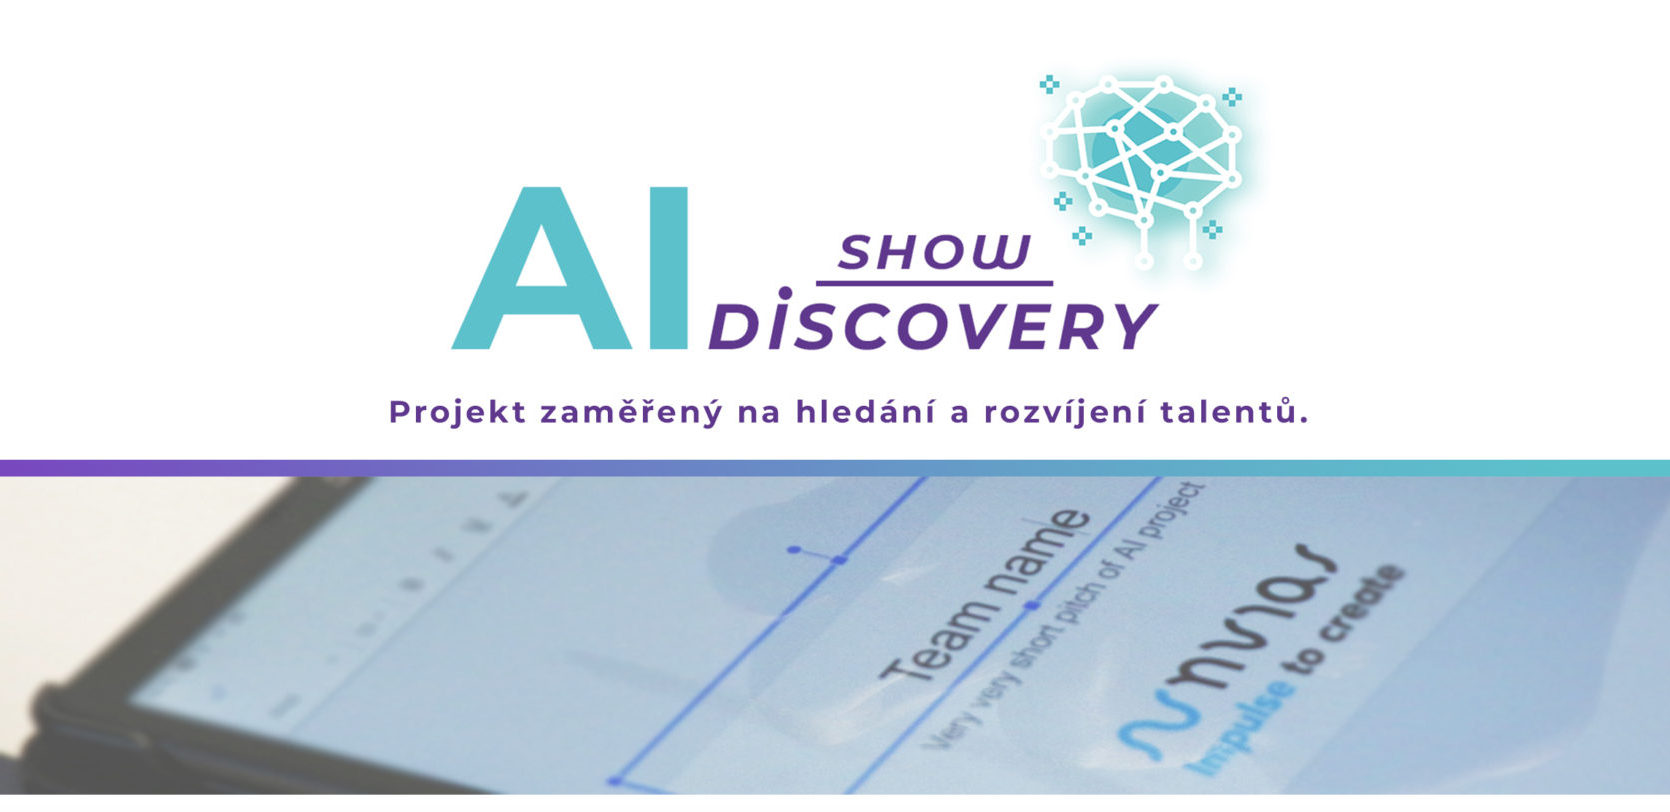 AI Discovery SHOW​